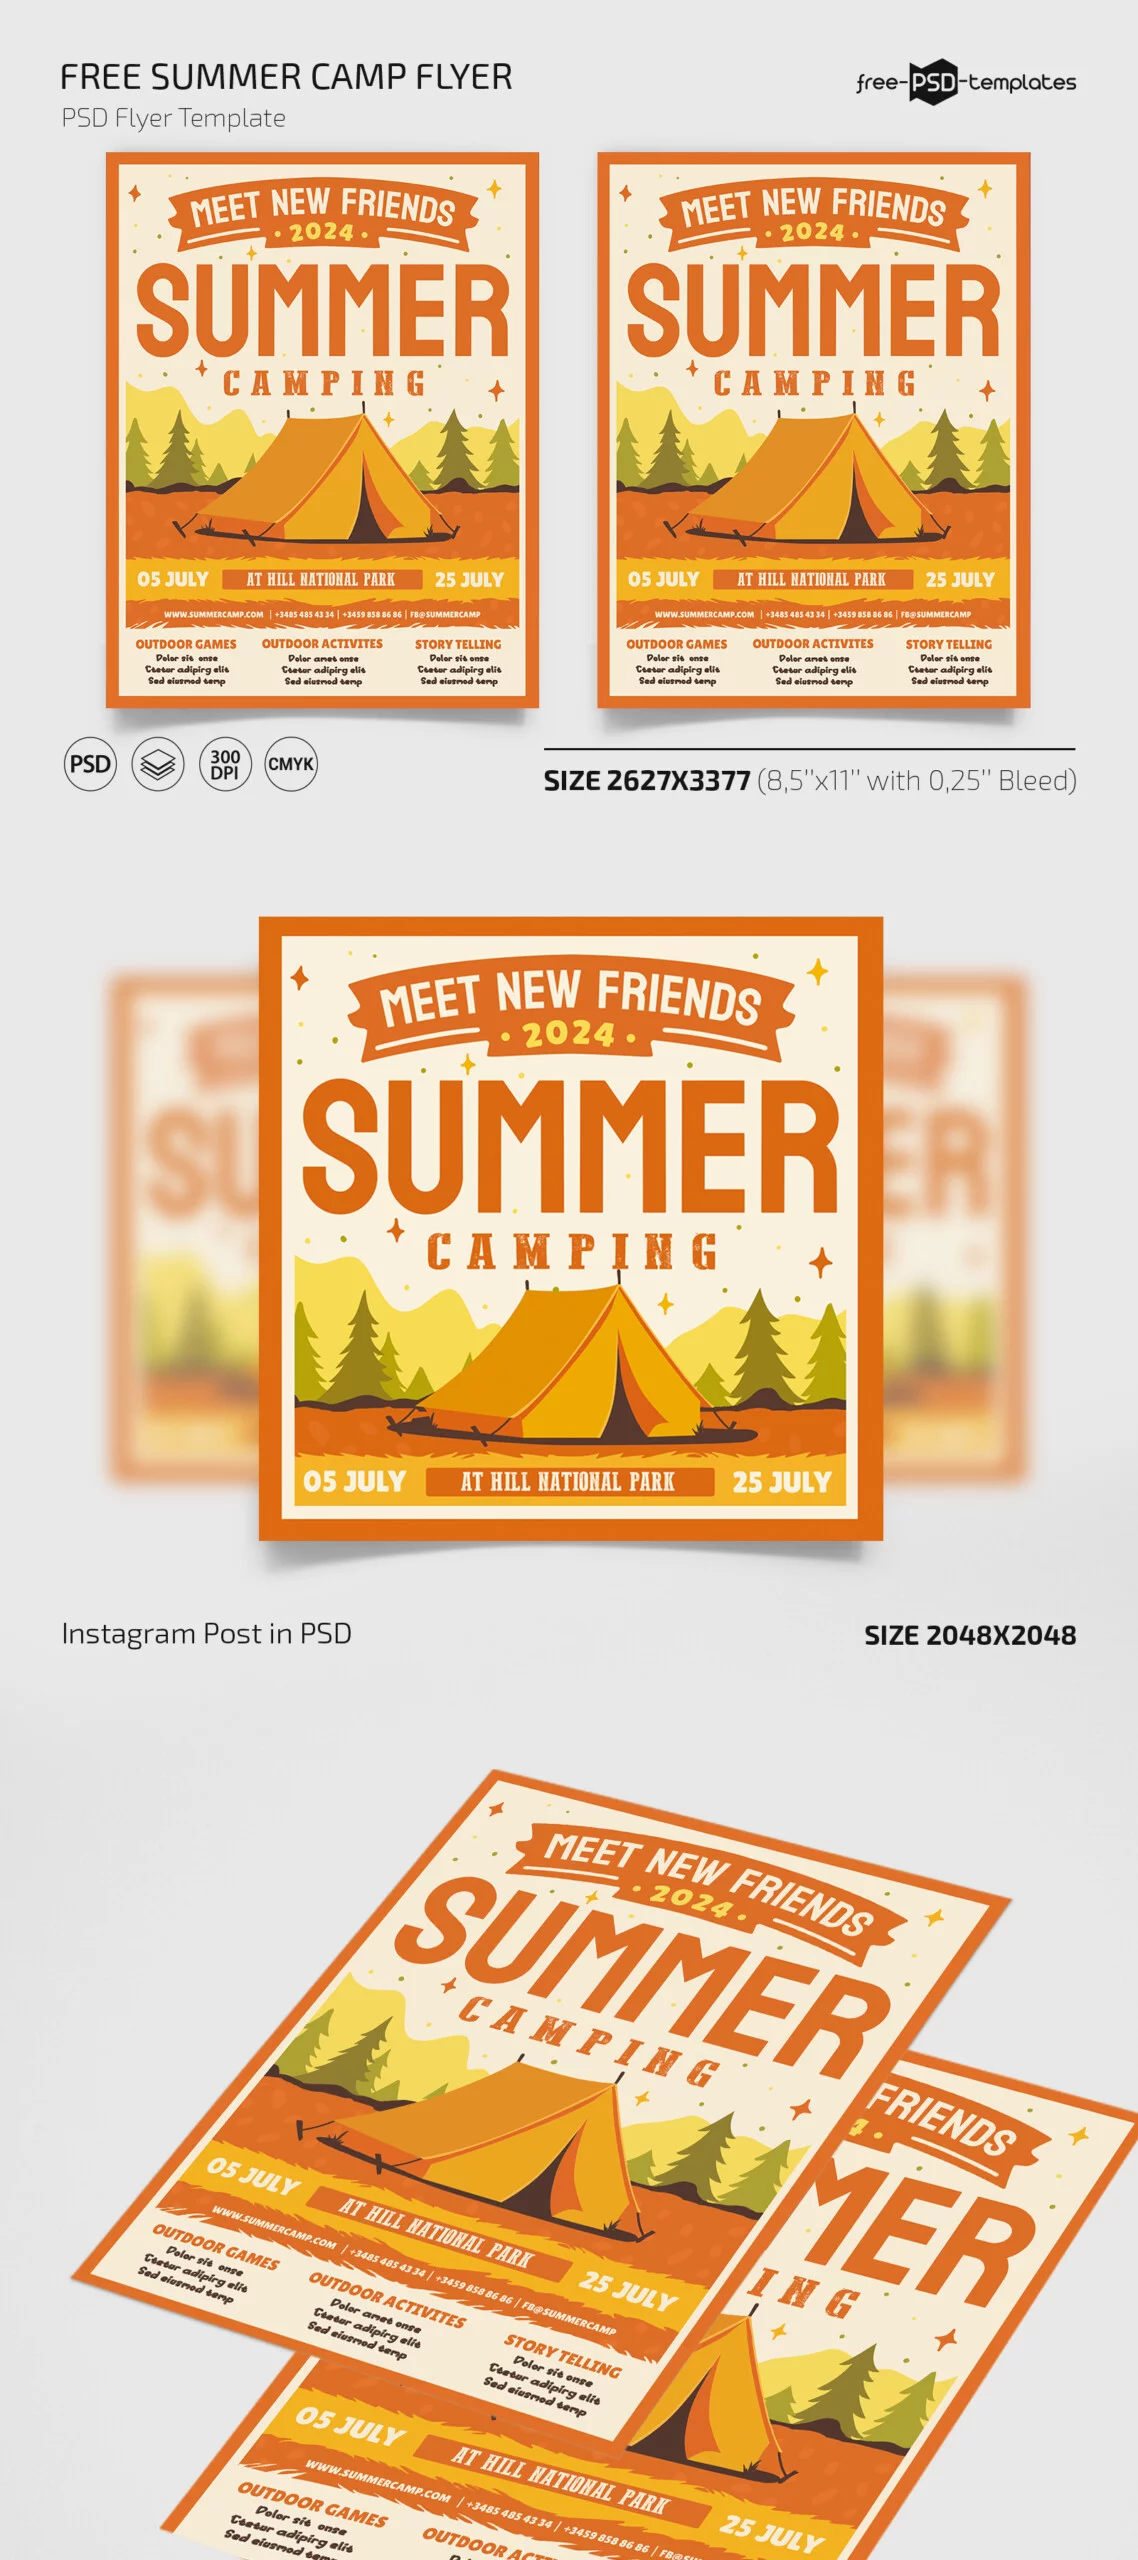 Free Summer Camp Flyer PSD Template